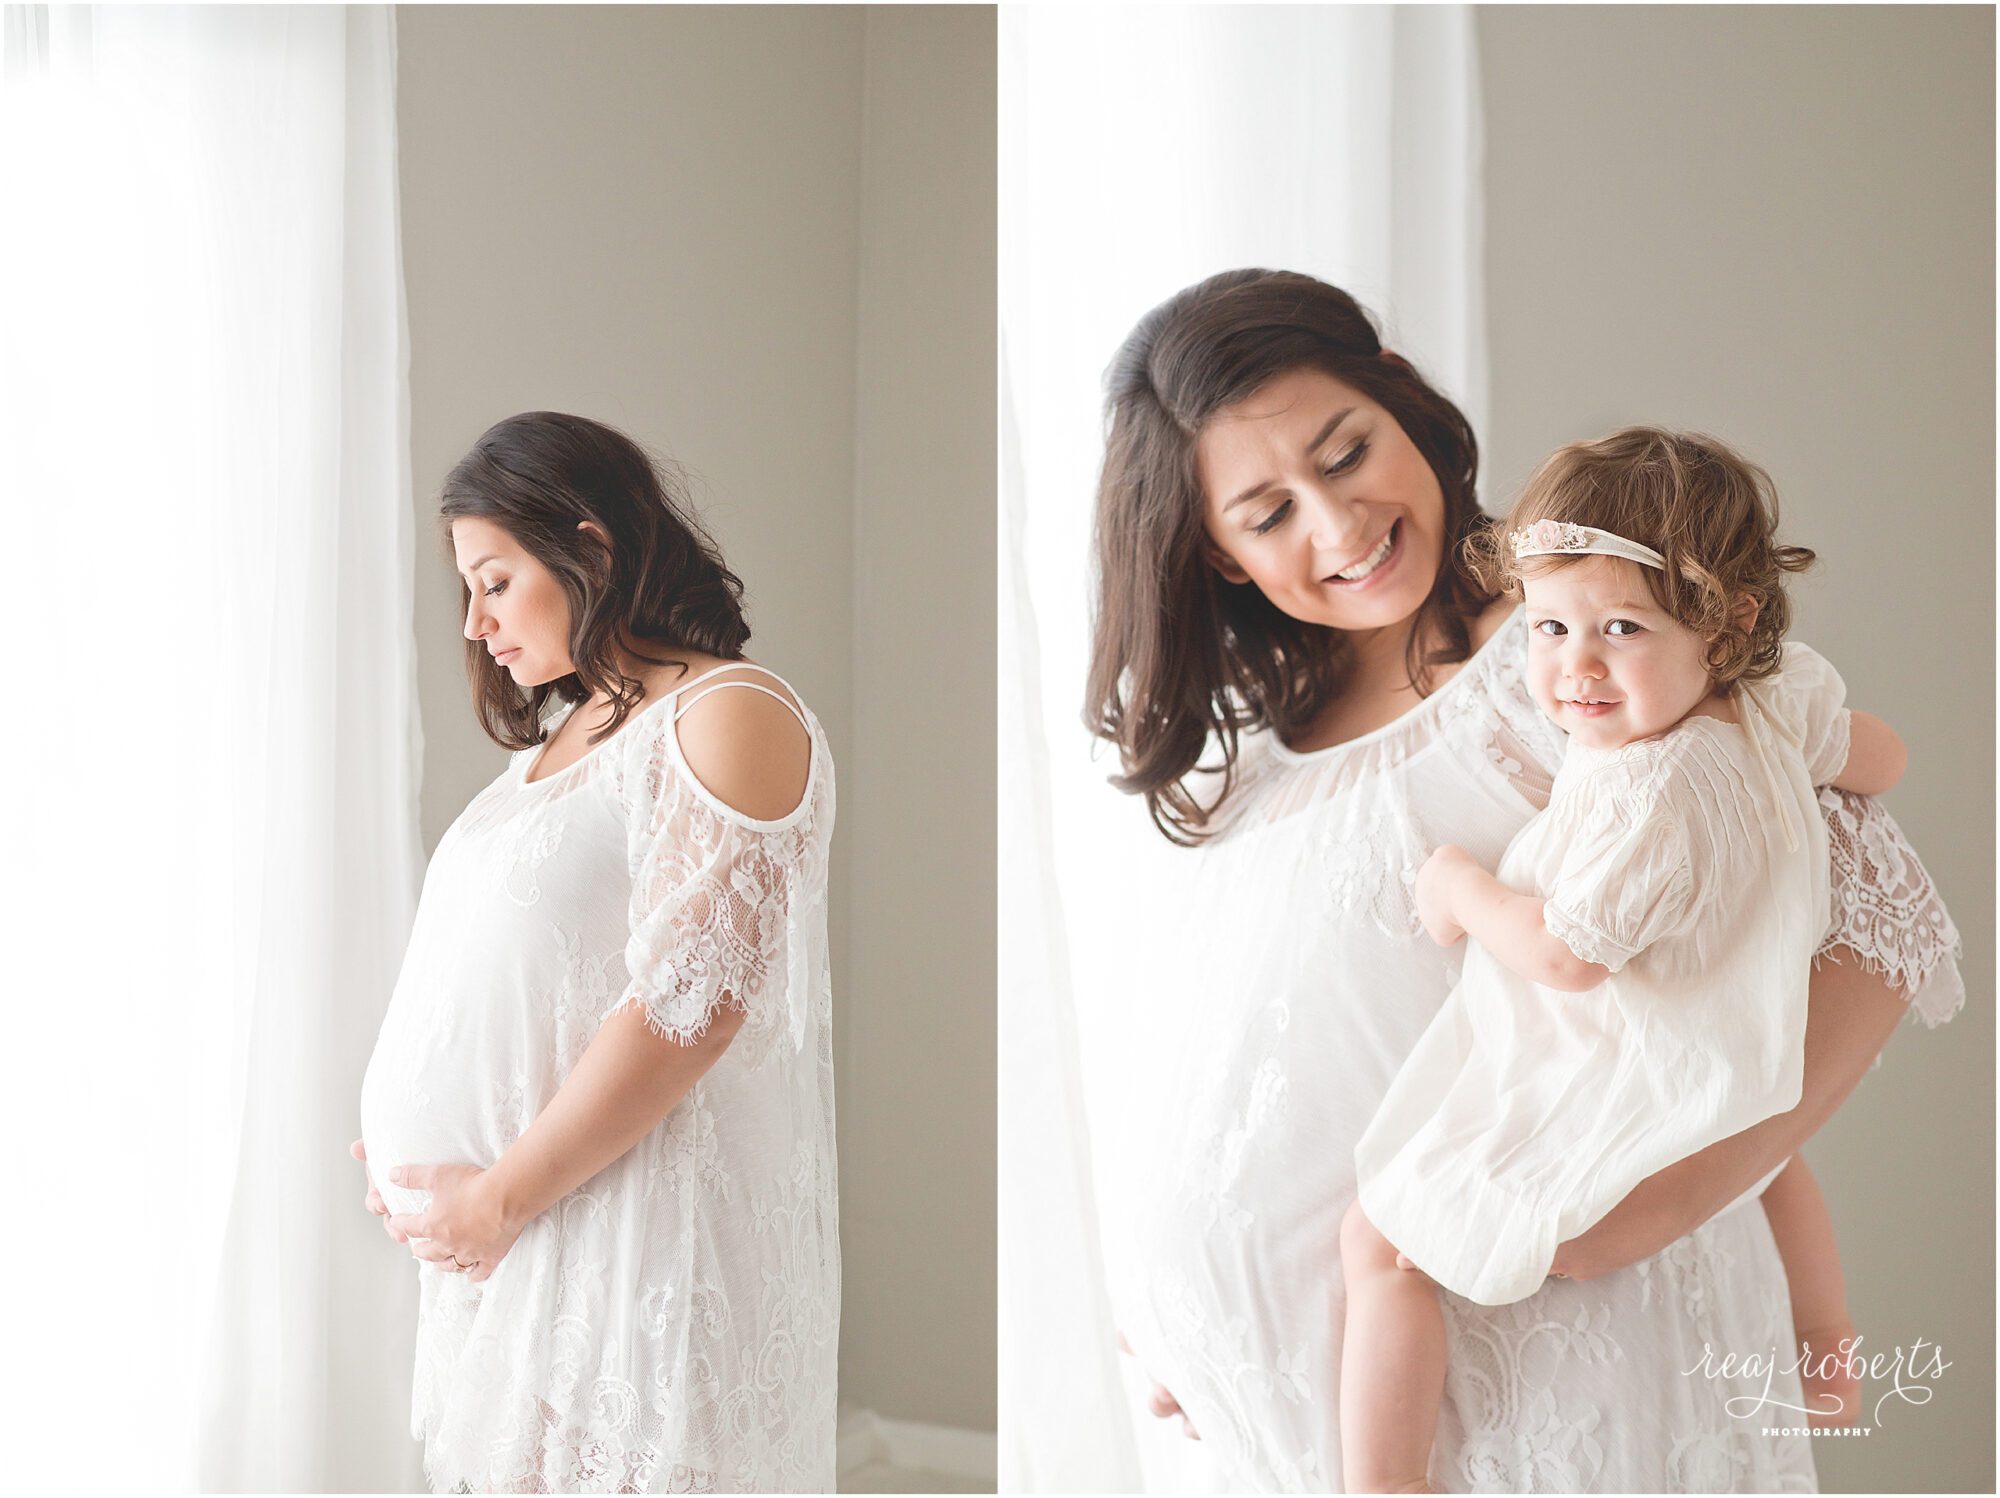 Chandler Maternity Motherhood Photographer | Reaj Roberts Photographer